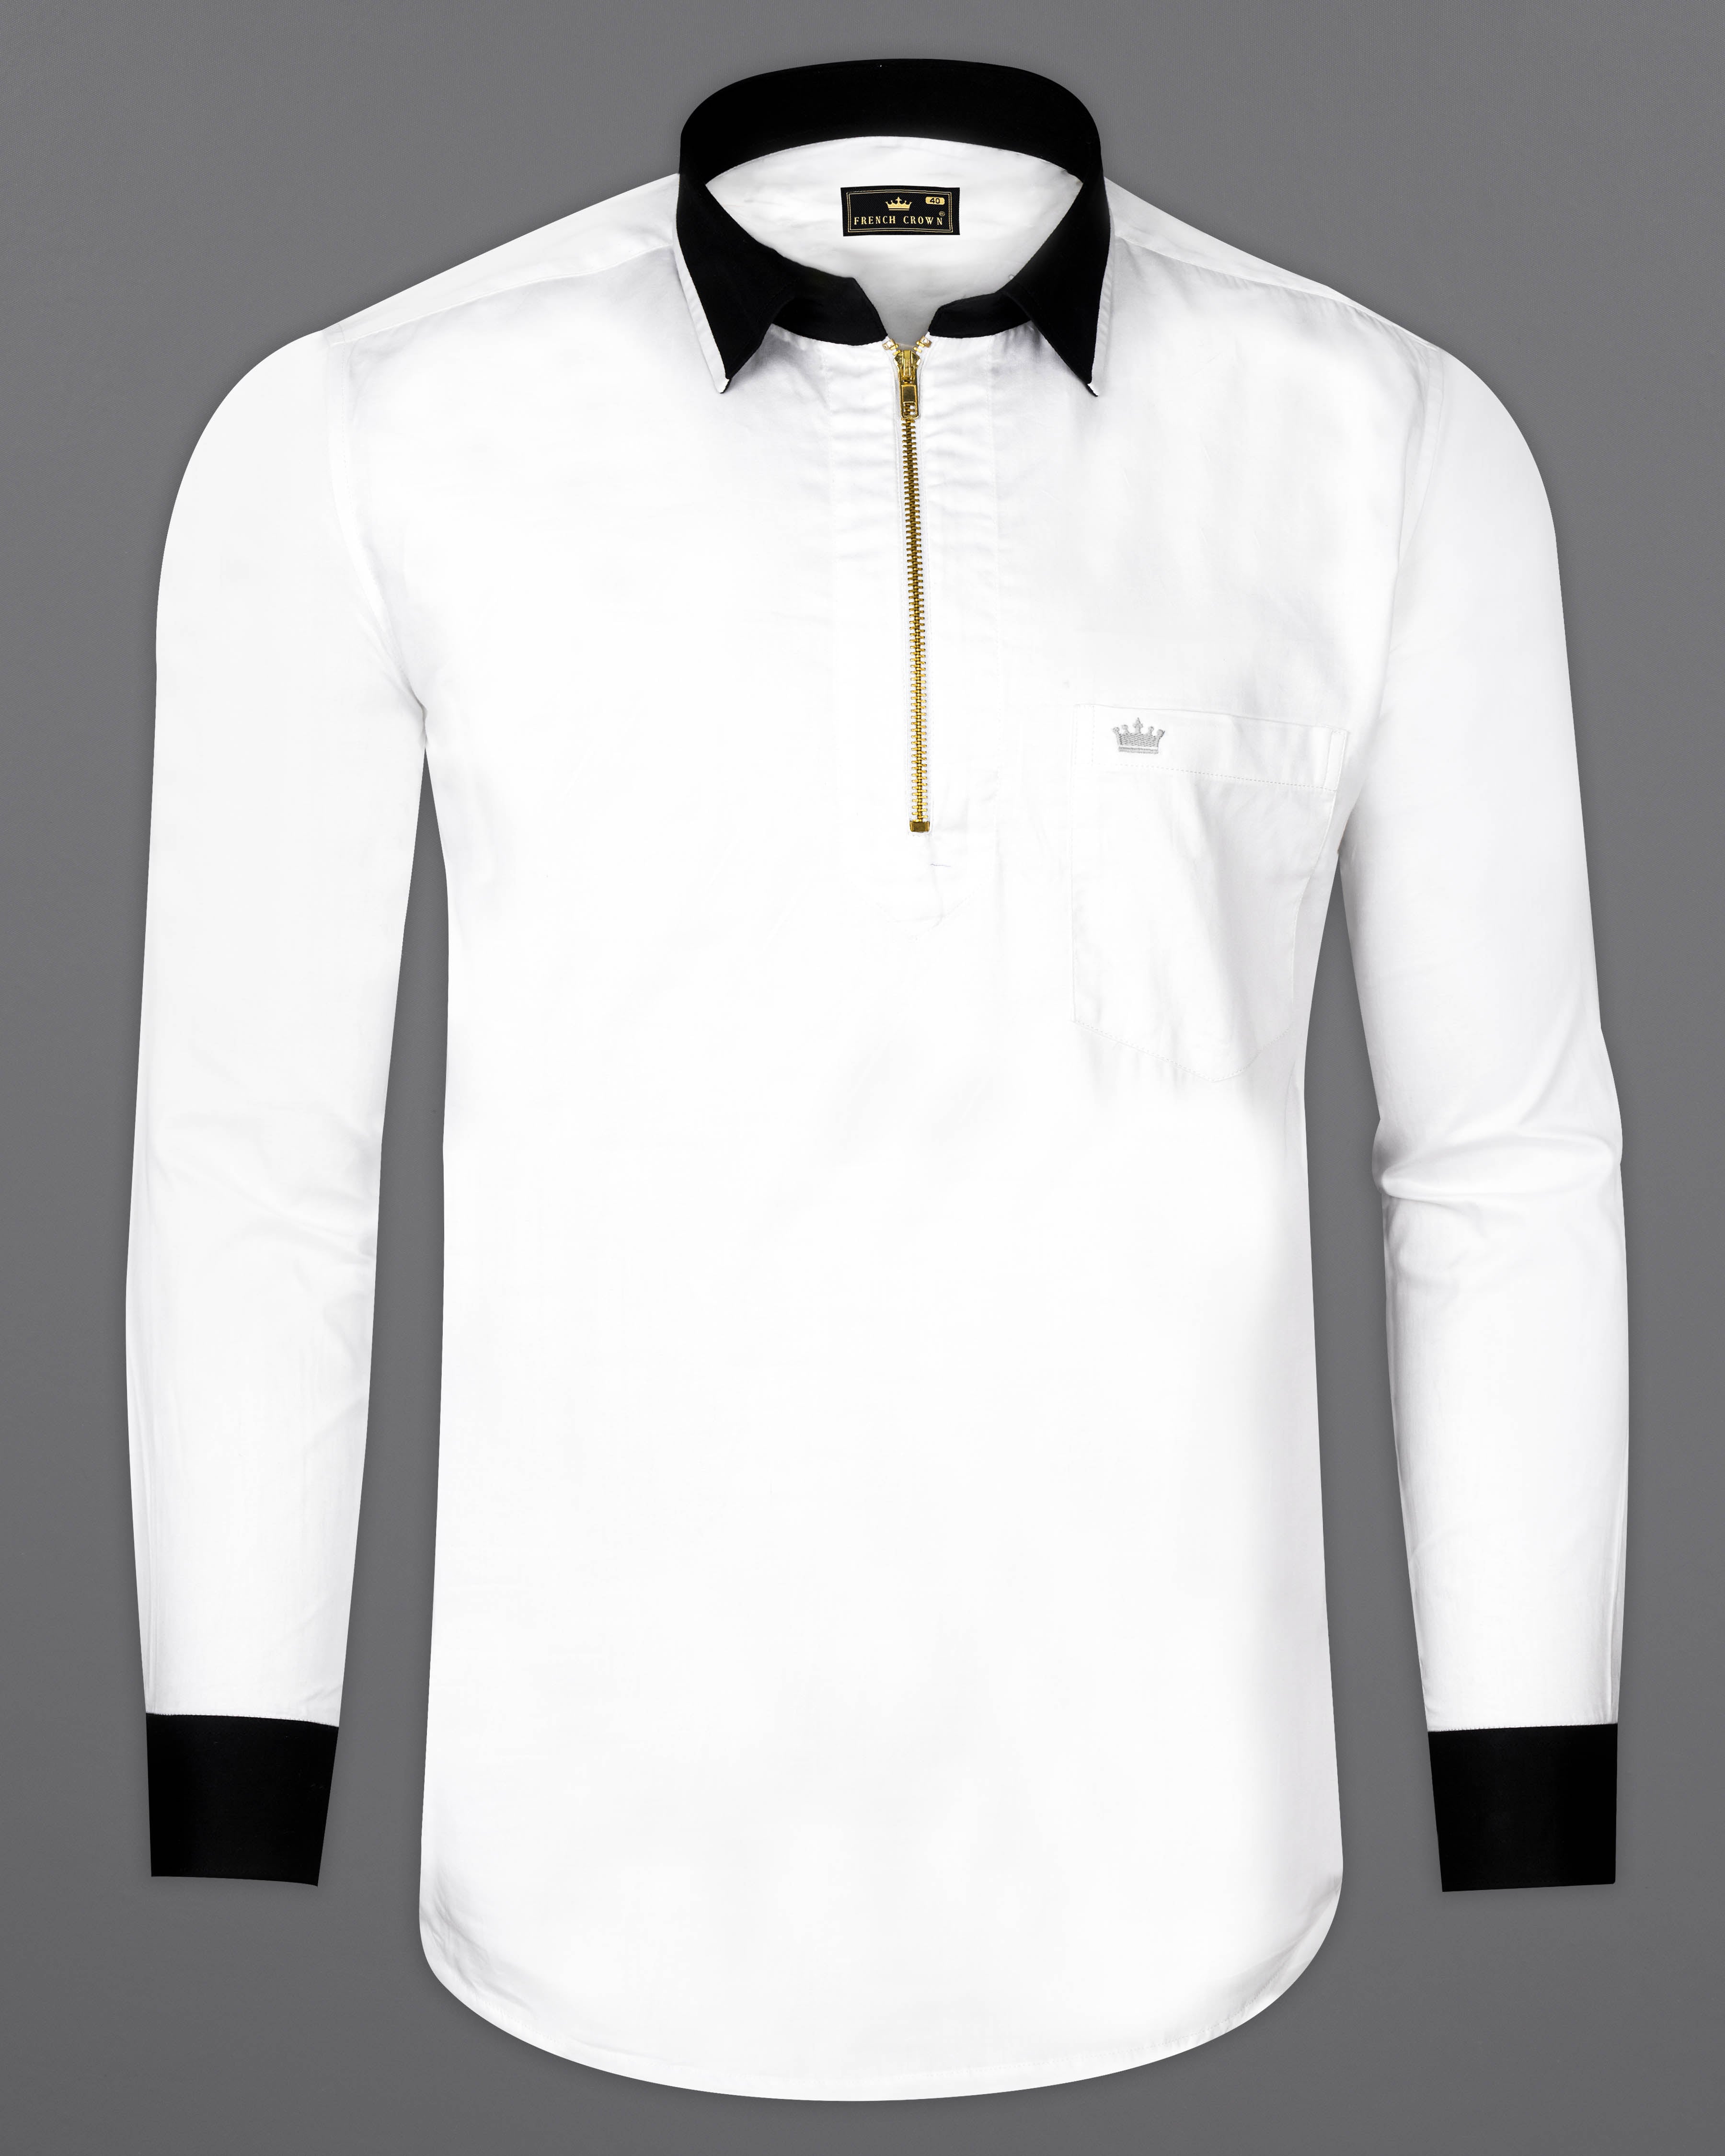 Bright White Super Soft Premium Cotton Designer Shirt with Black Collar and Cuffs 9730-BCC-ZP-P76-38,9730-BCC-ZP-P76-H-38,9730-BCC-ZP-P76-39,9730-BCC-ZP-P76-H-39,9730-BCC-ZP-P76-40,9730-BCC-ZP-P76-H-40,9730-BCC-ZP-P76-42,9730-BCC-ZP-P76-H-42,9730-BCC-ZP-P76-44,9730-BCC-ZP-P76-H-44,9730-BCC-ZP-P76-46,9730-BCC-ZP-P76-H-46,9730-BCC-ZP-P76-48,9730-BCC-ZP-P76-H-48,9730-BCC-ZP-P76-50,9730-BCC-ZP-P76-H-50,9730-BCC-ZP-P76-52,9730-BCC-ZP-P76-H-52